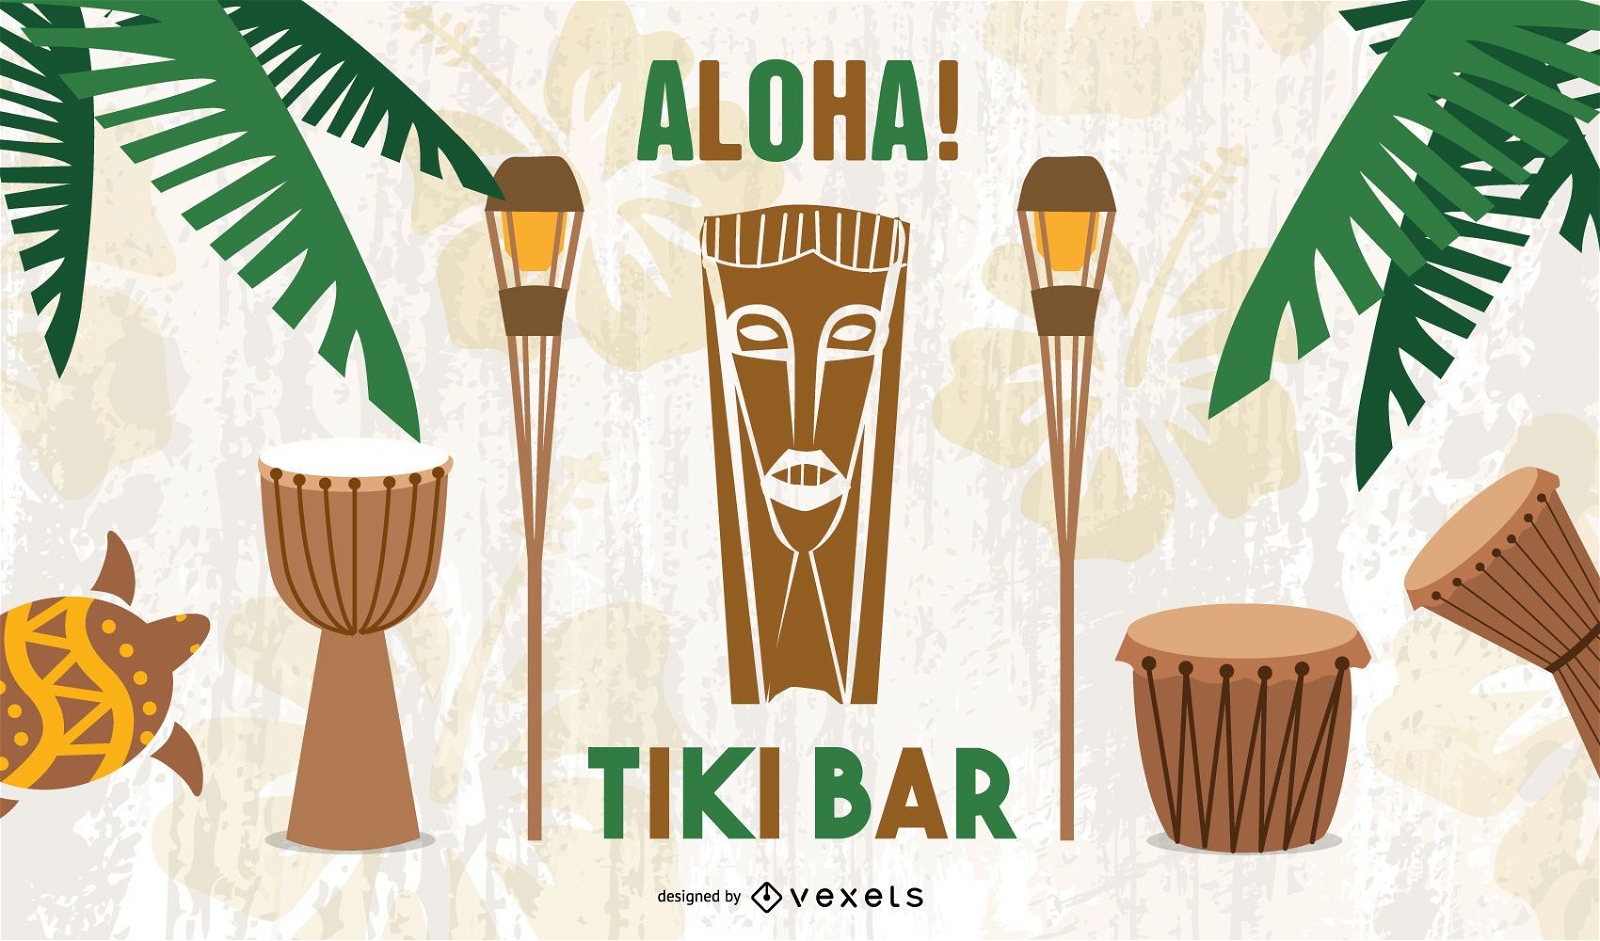 Tiki Bar Aloha illustration